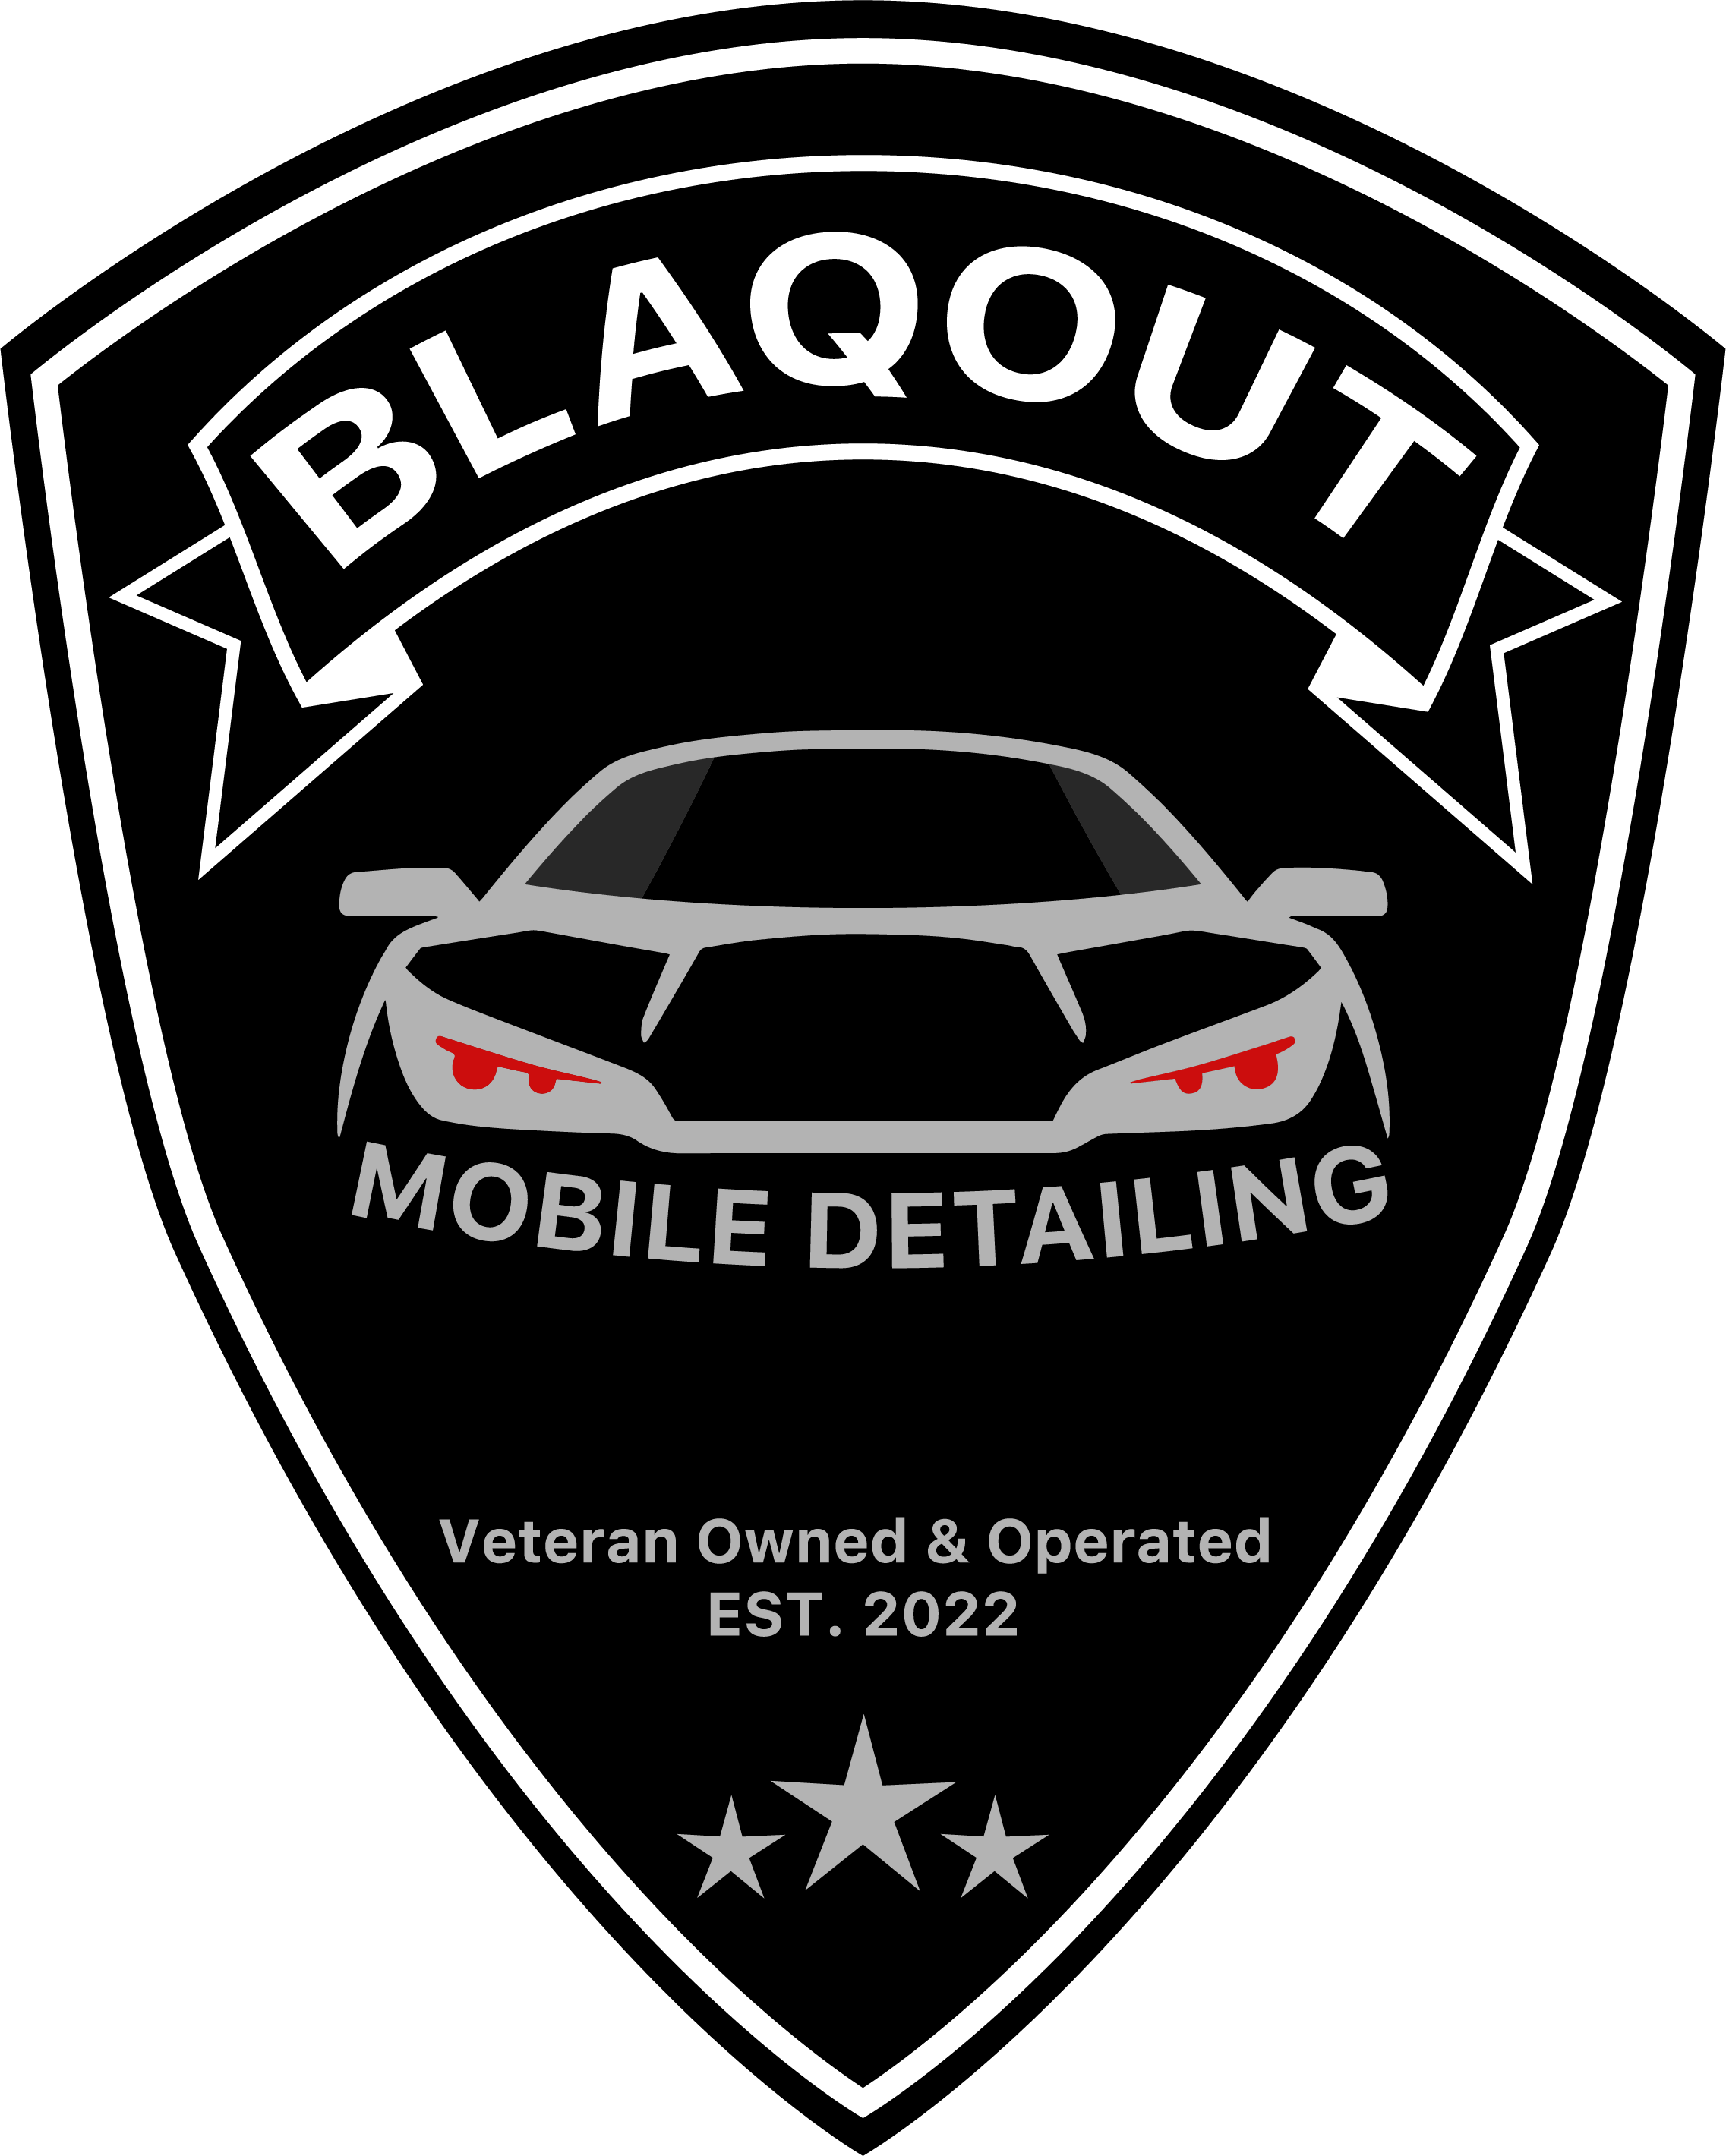 BlaQout